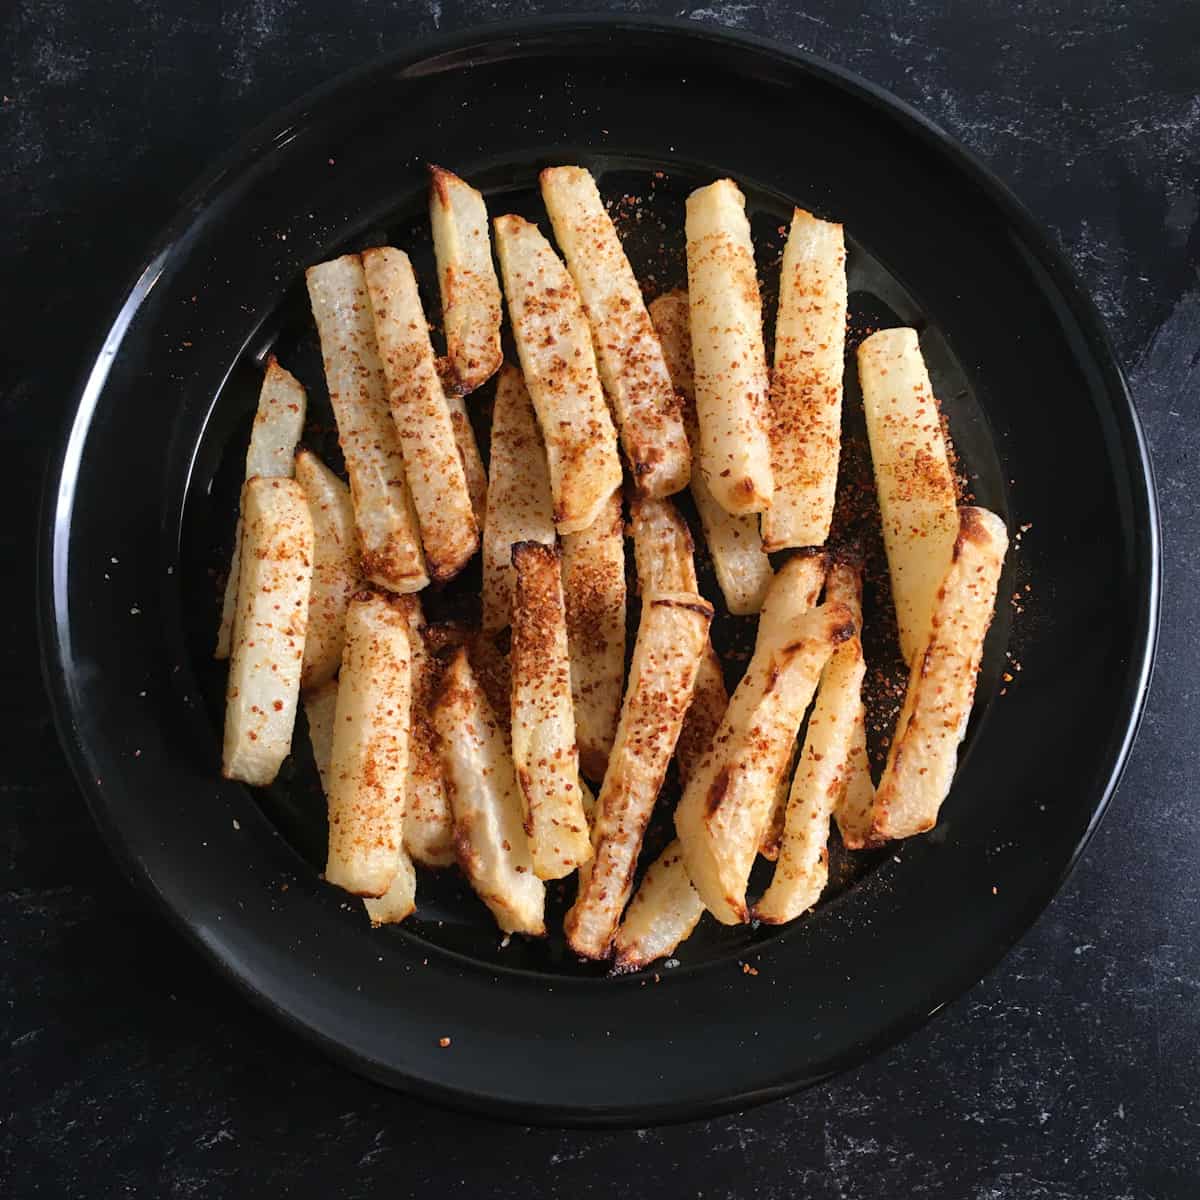 https://summeryule.com/wp-content/uploads/2022/04/air-fryer-jicama-fries.jpeg